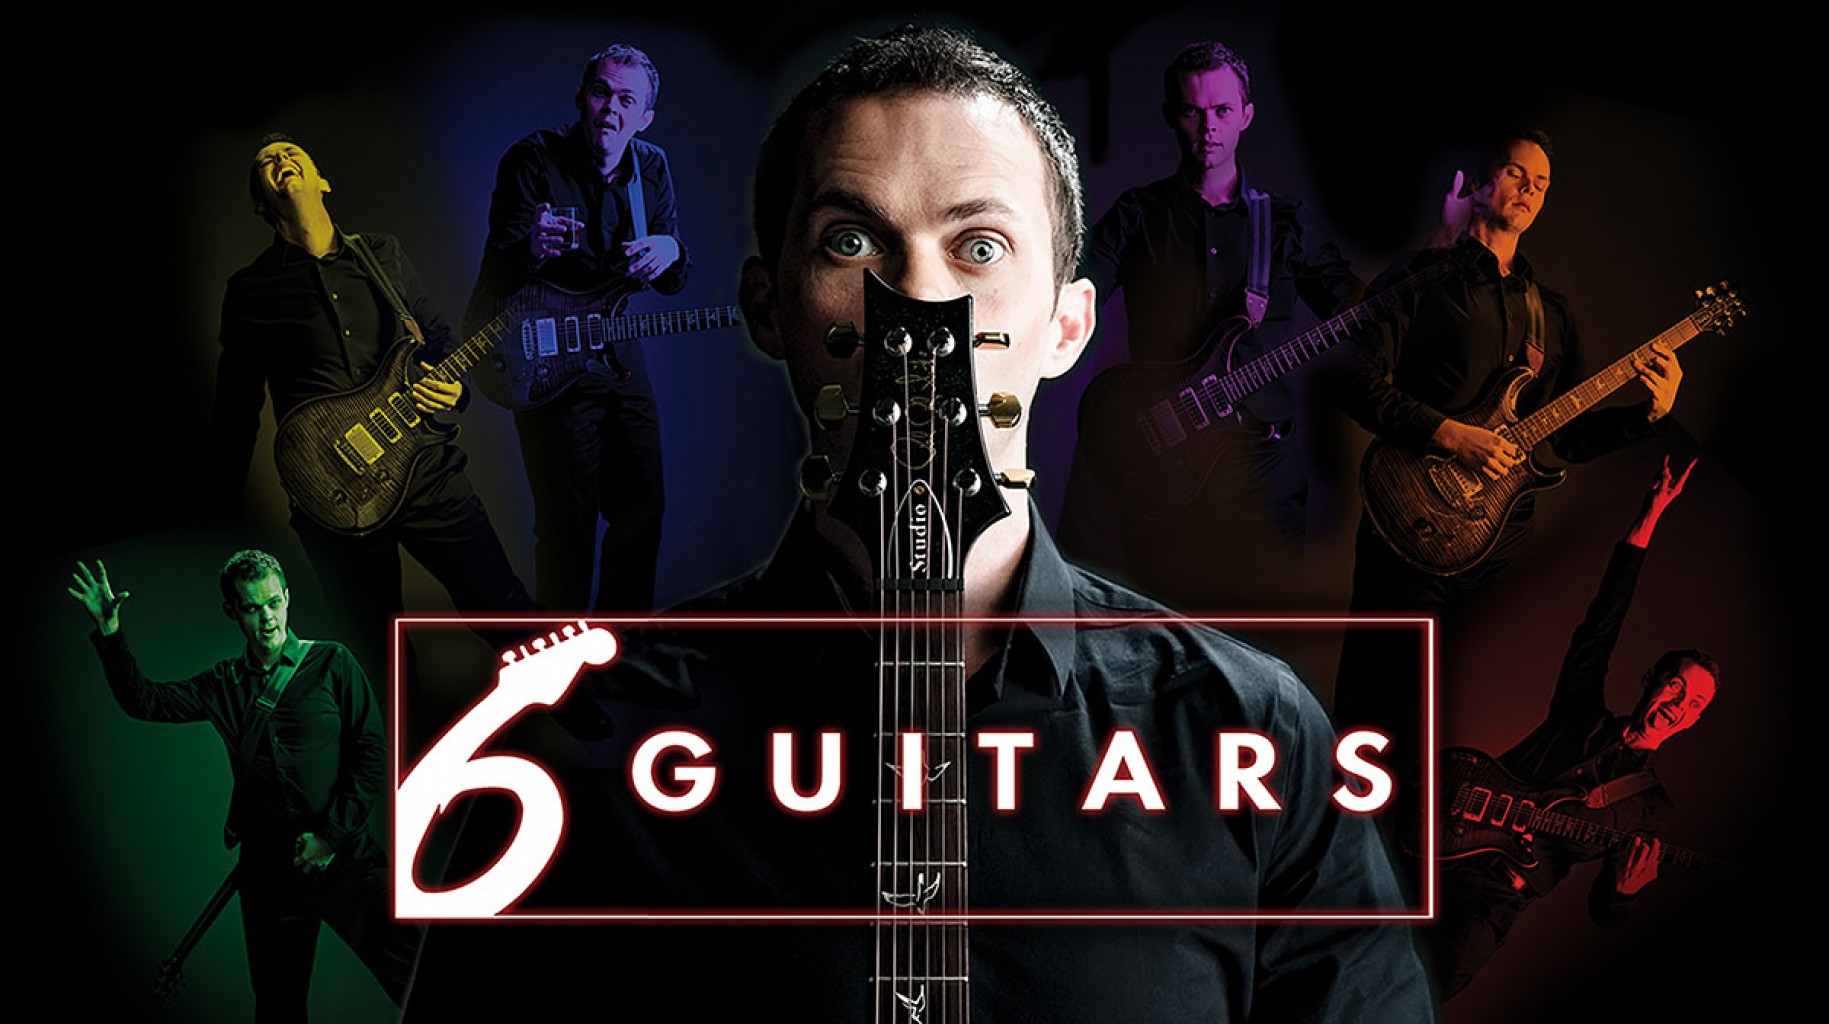 “6 Guitars” to perform at OCCC April 9